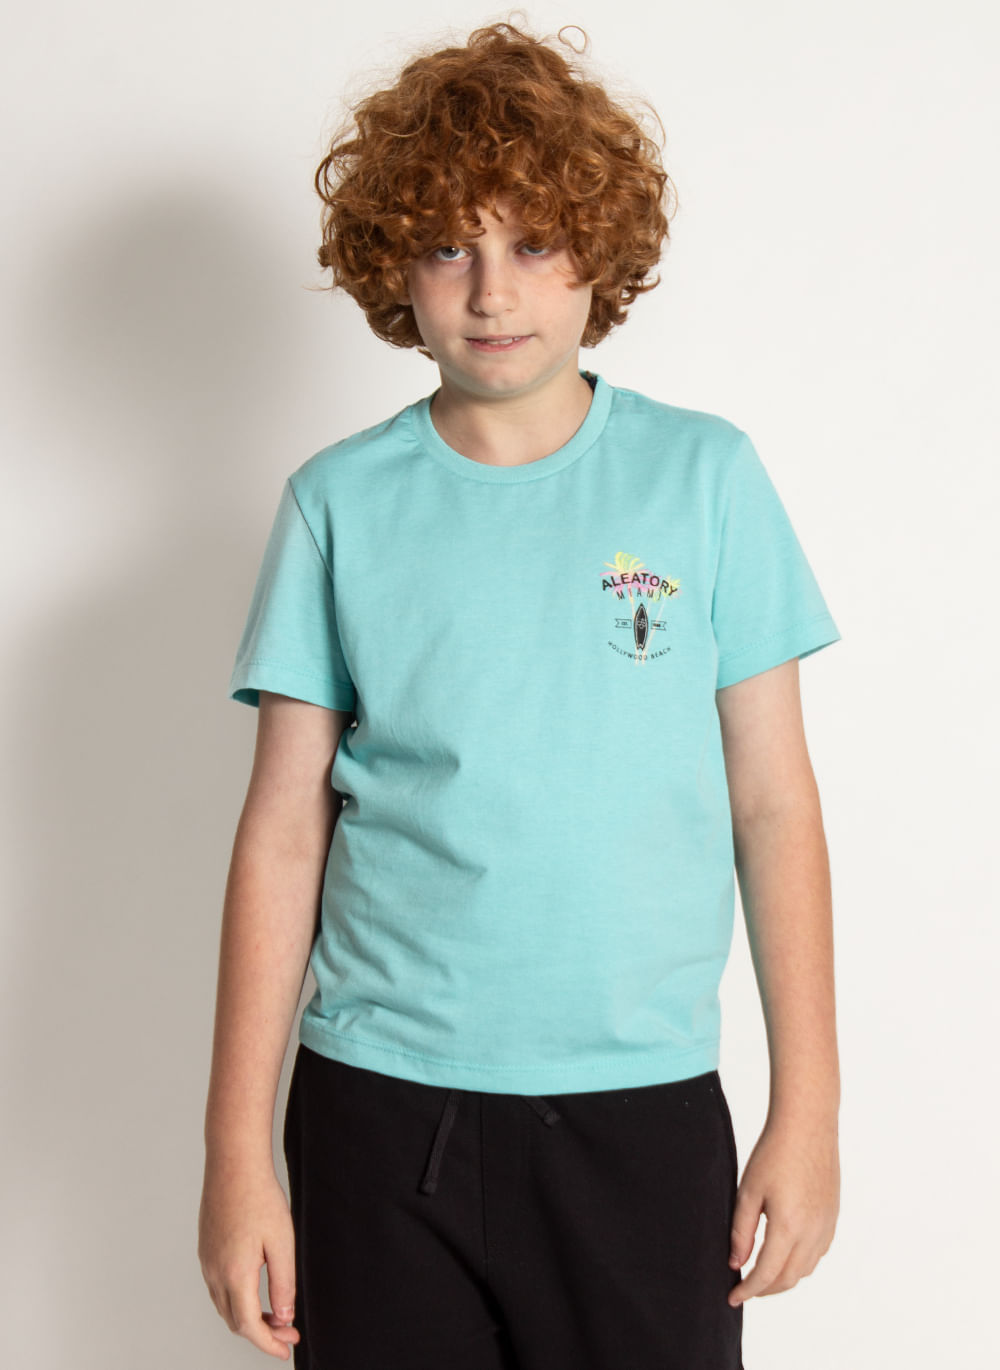 camiseta-estampada-aleatory-kids-hollywood-beach-verde-modelo-2020-4-